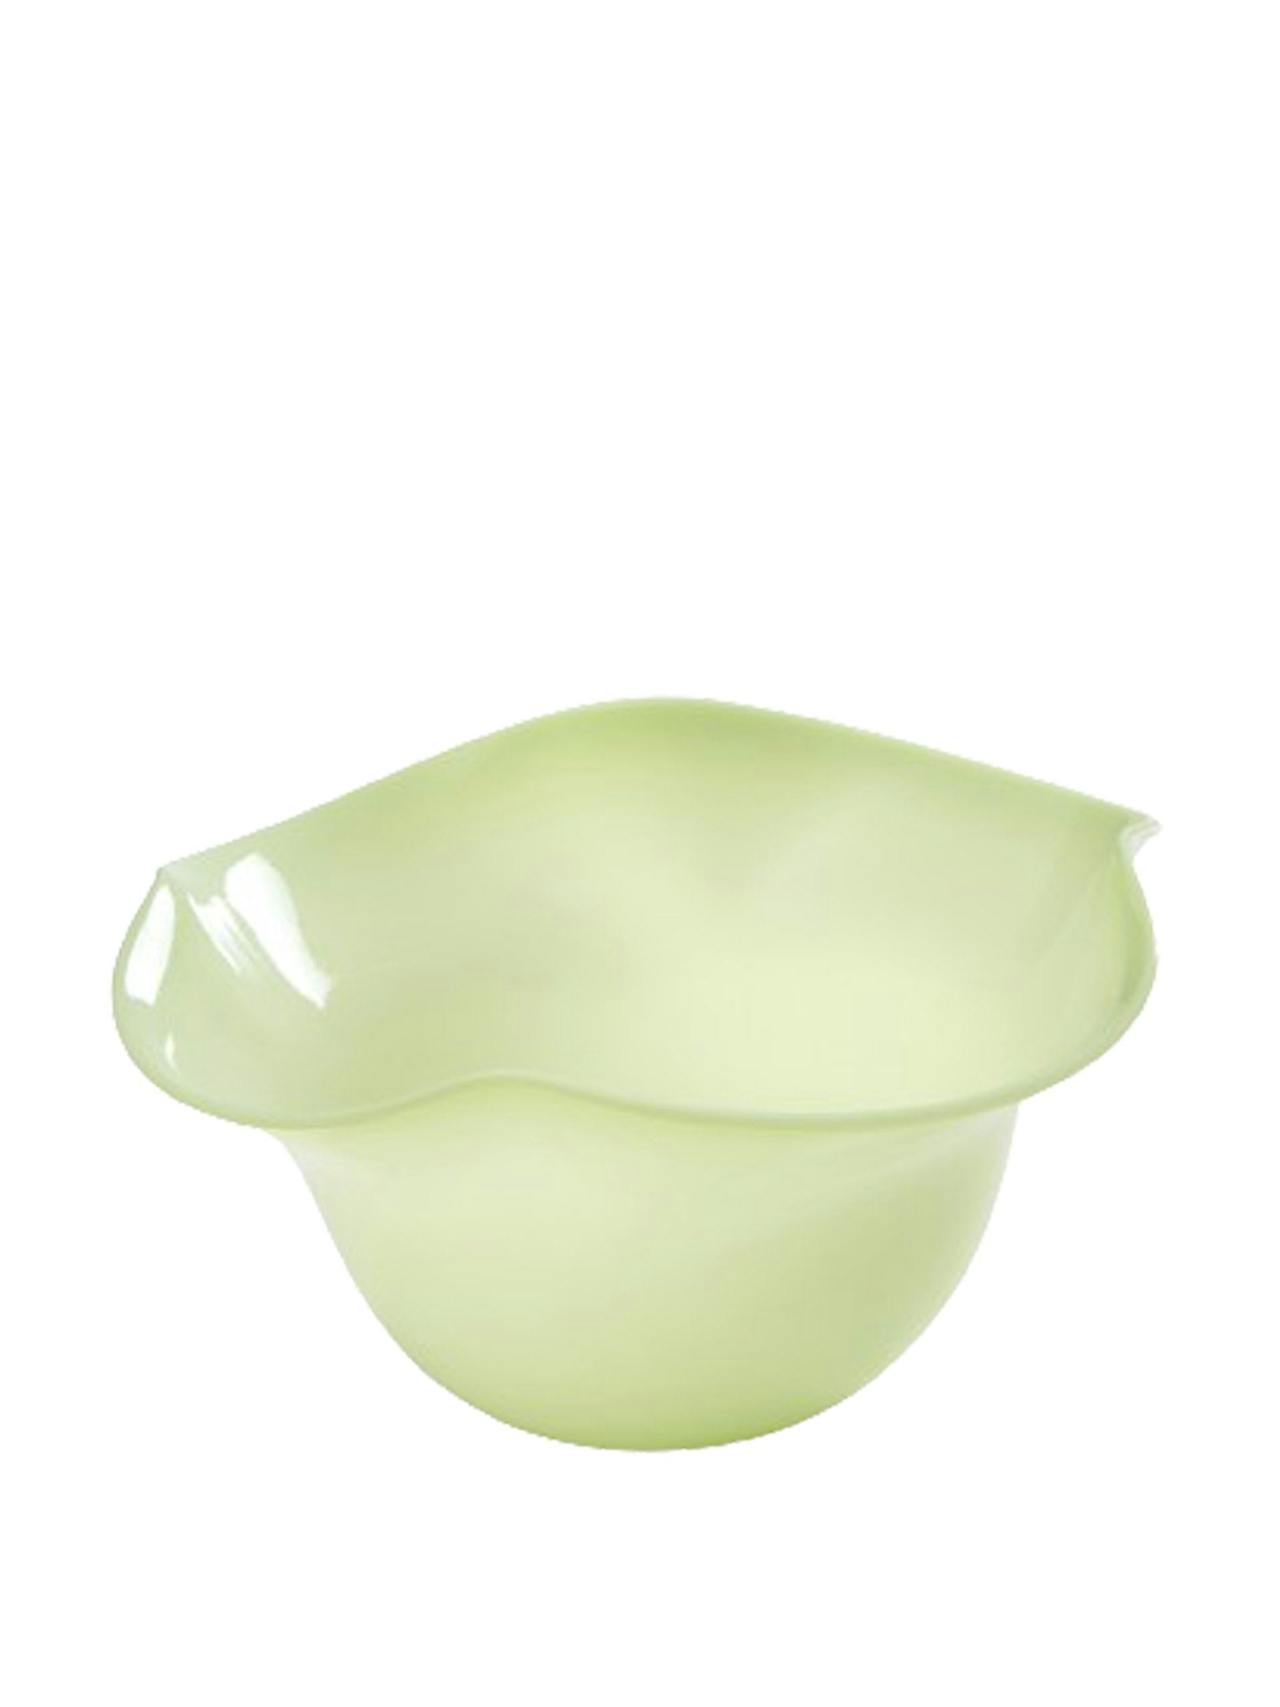 Murano ruffle bowl in green